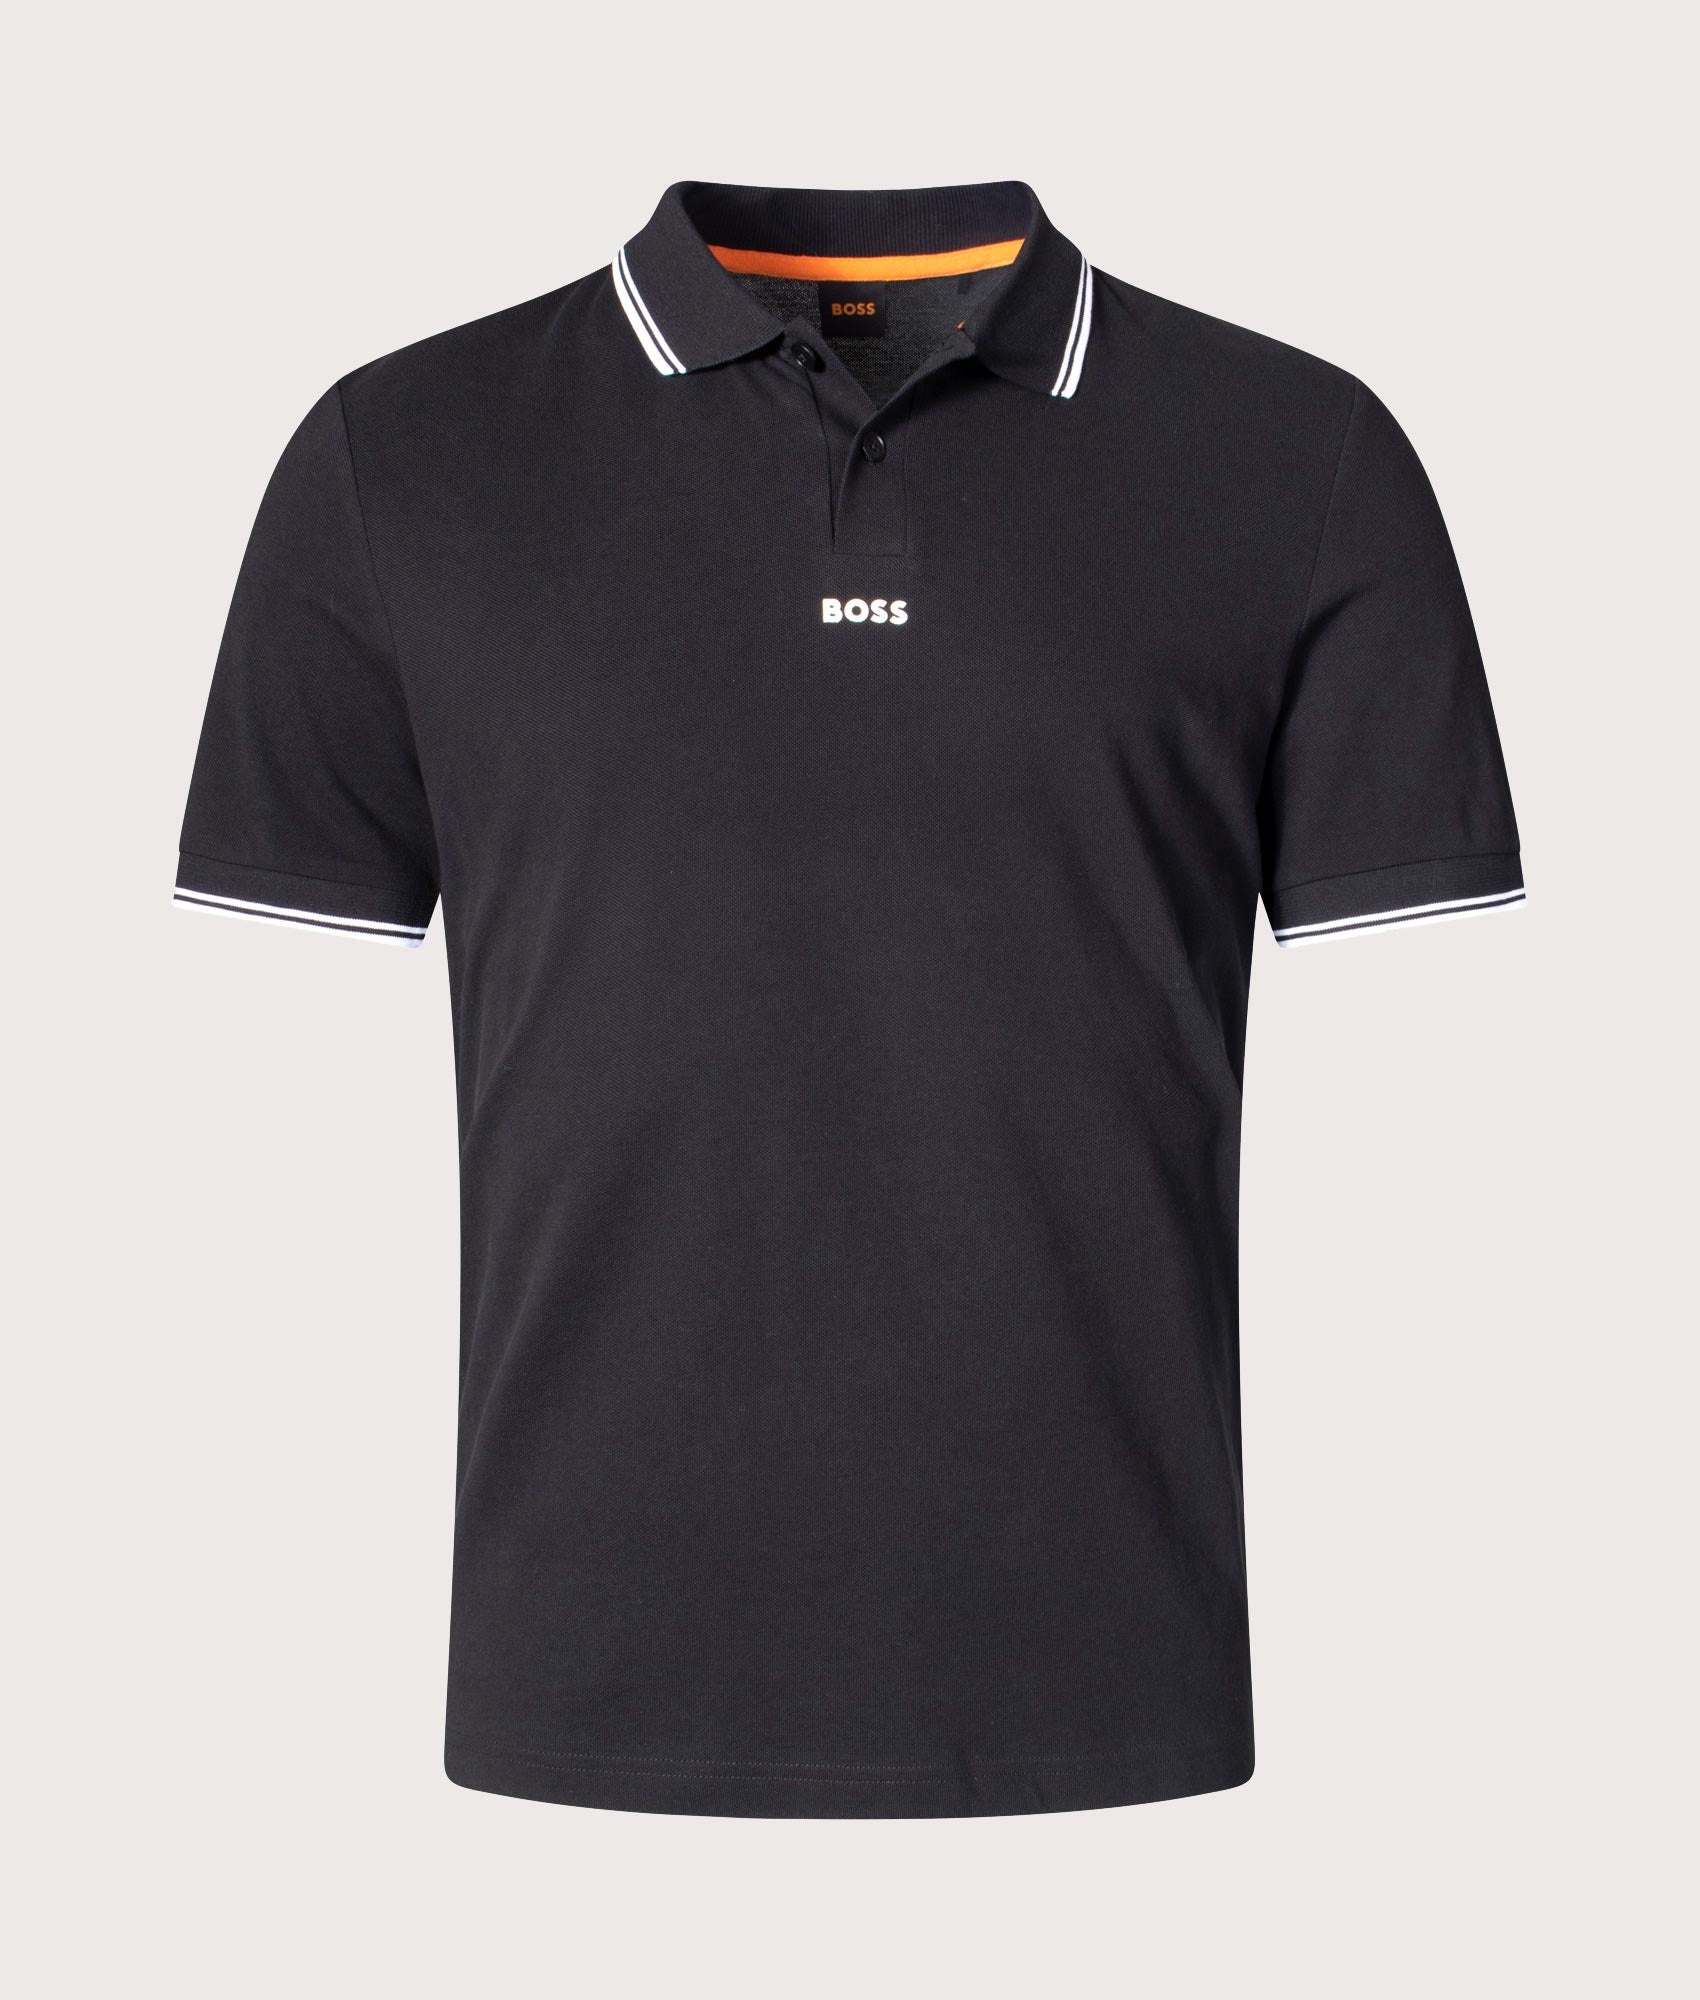 BOSS Mens Pchup Polo Shirt - Colour: 001 Black - Size: Medium